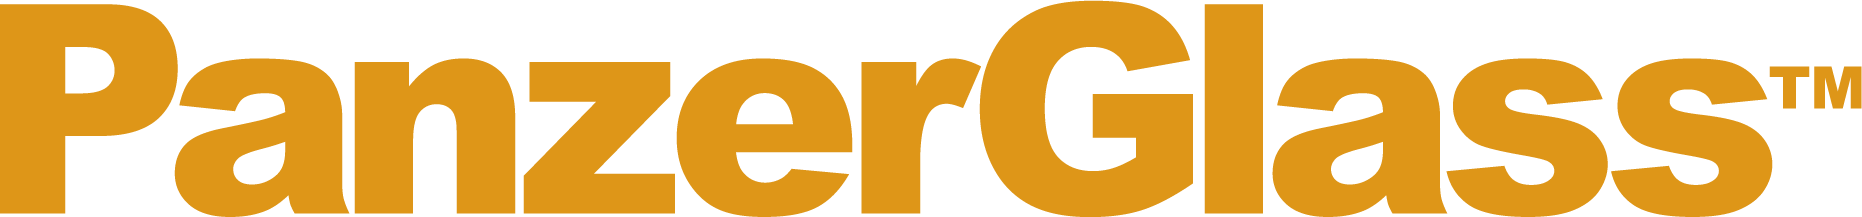  PanzerGlass™ International logo